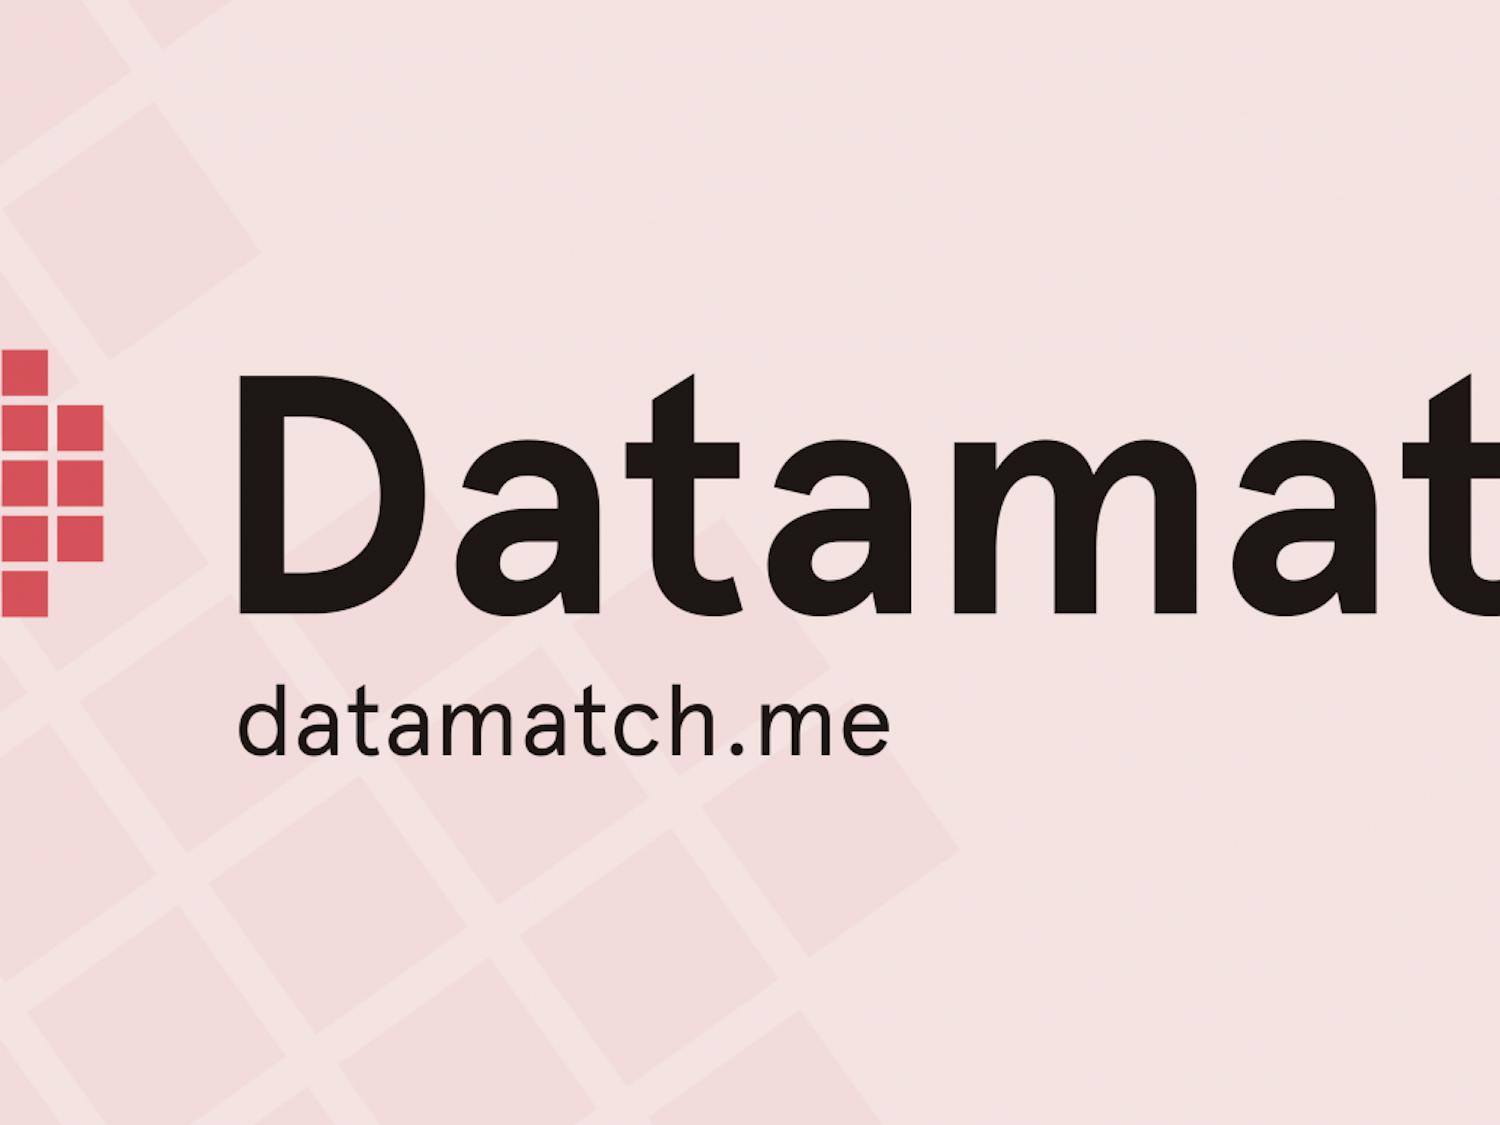 datamatch-image.png